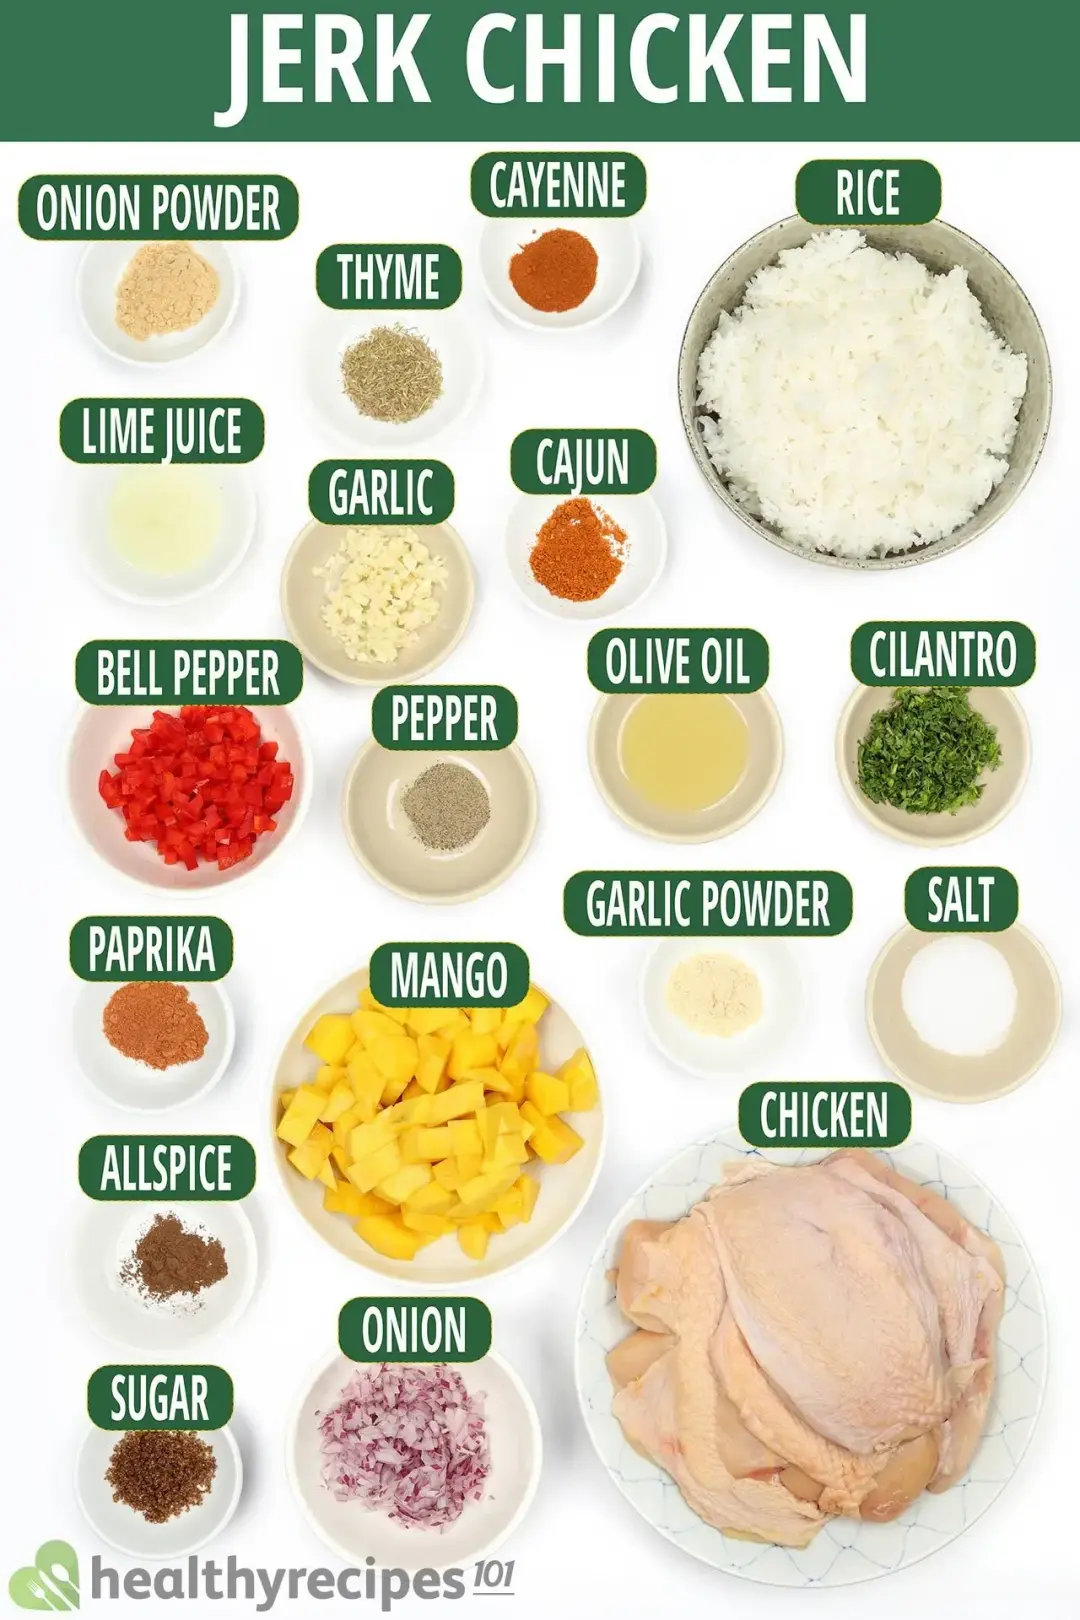 Ingredients for Jerk Chicken